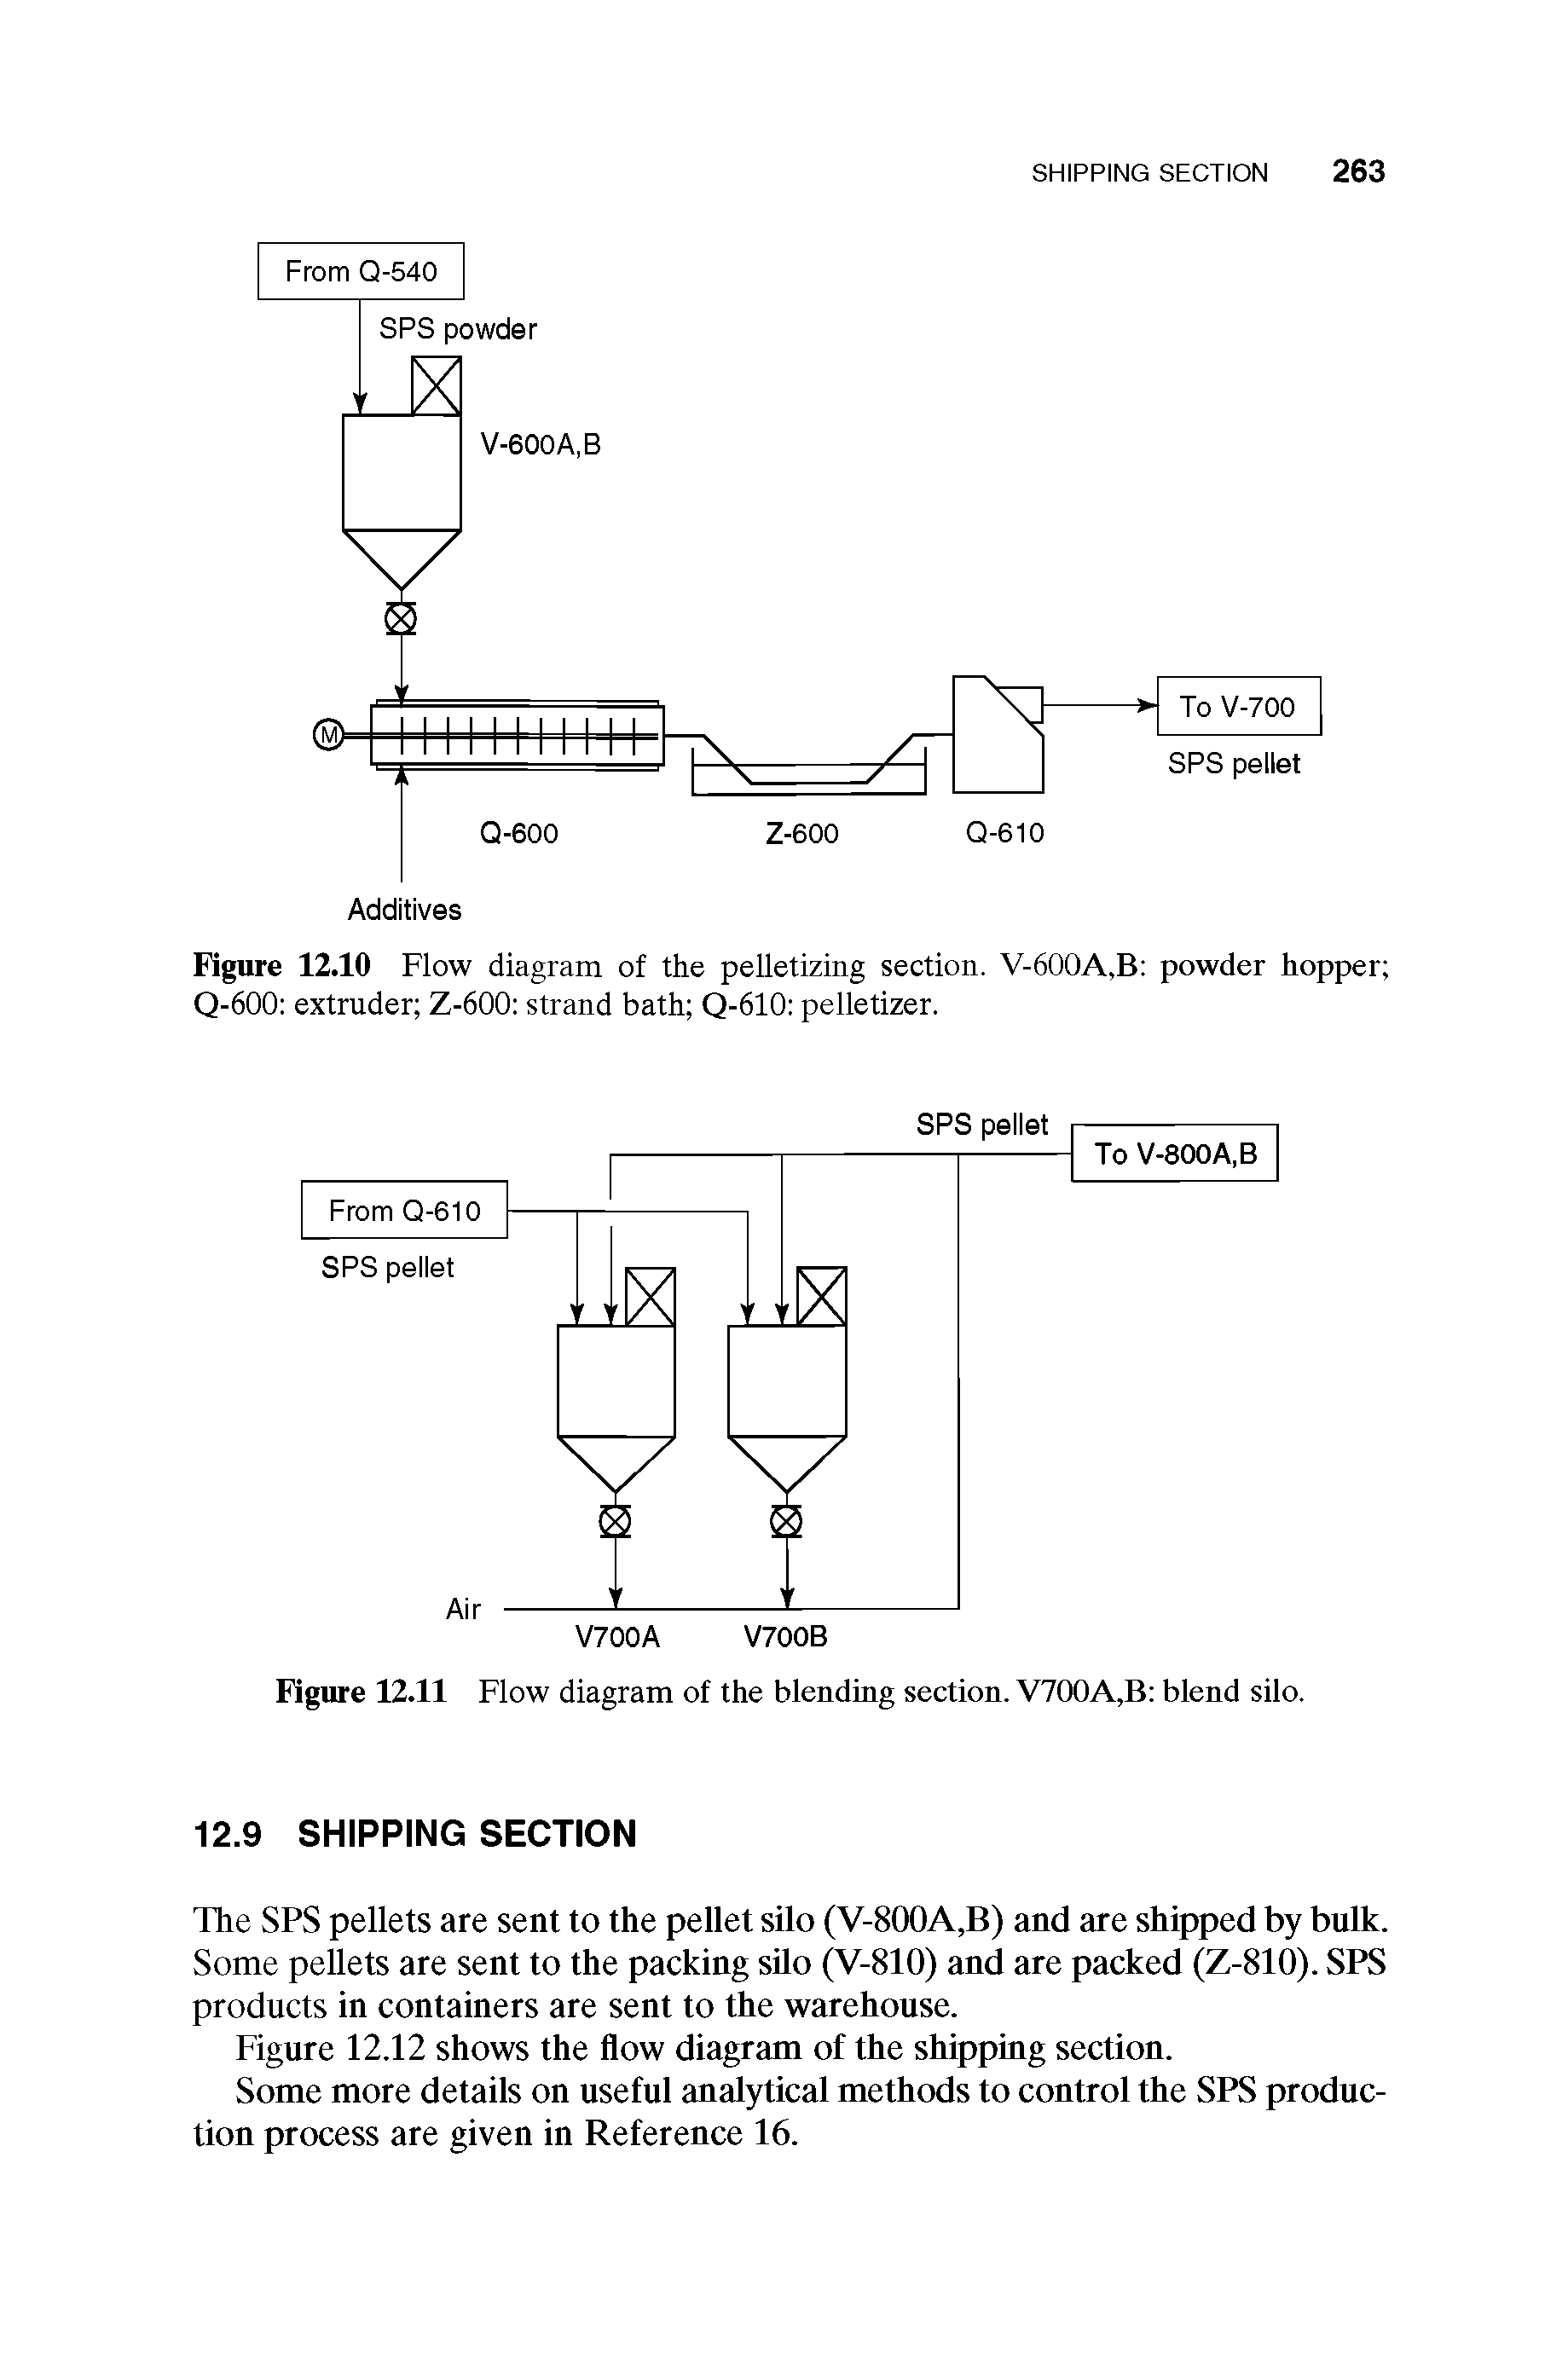 Figure 12.10 Flow diagram of the pelletizing section. V-600A,B powder hopjrer Q-600 extruder Z-600 strand bath Q-610 pelletizer.